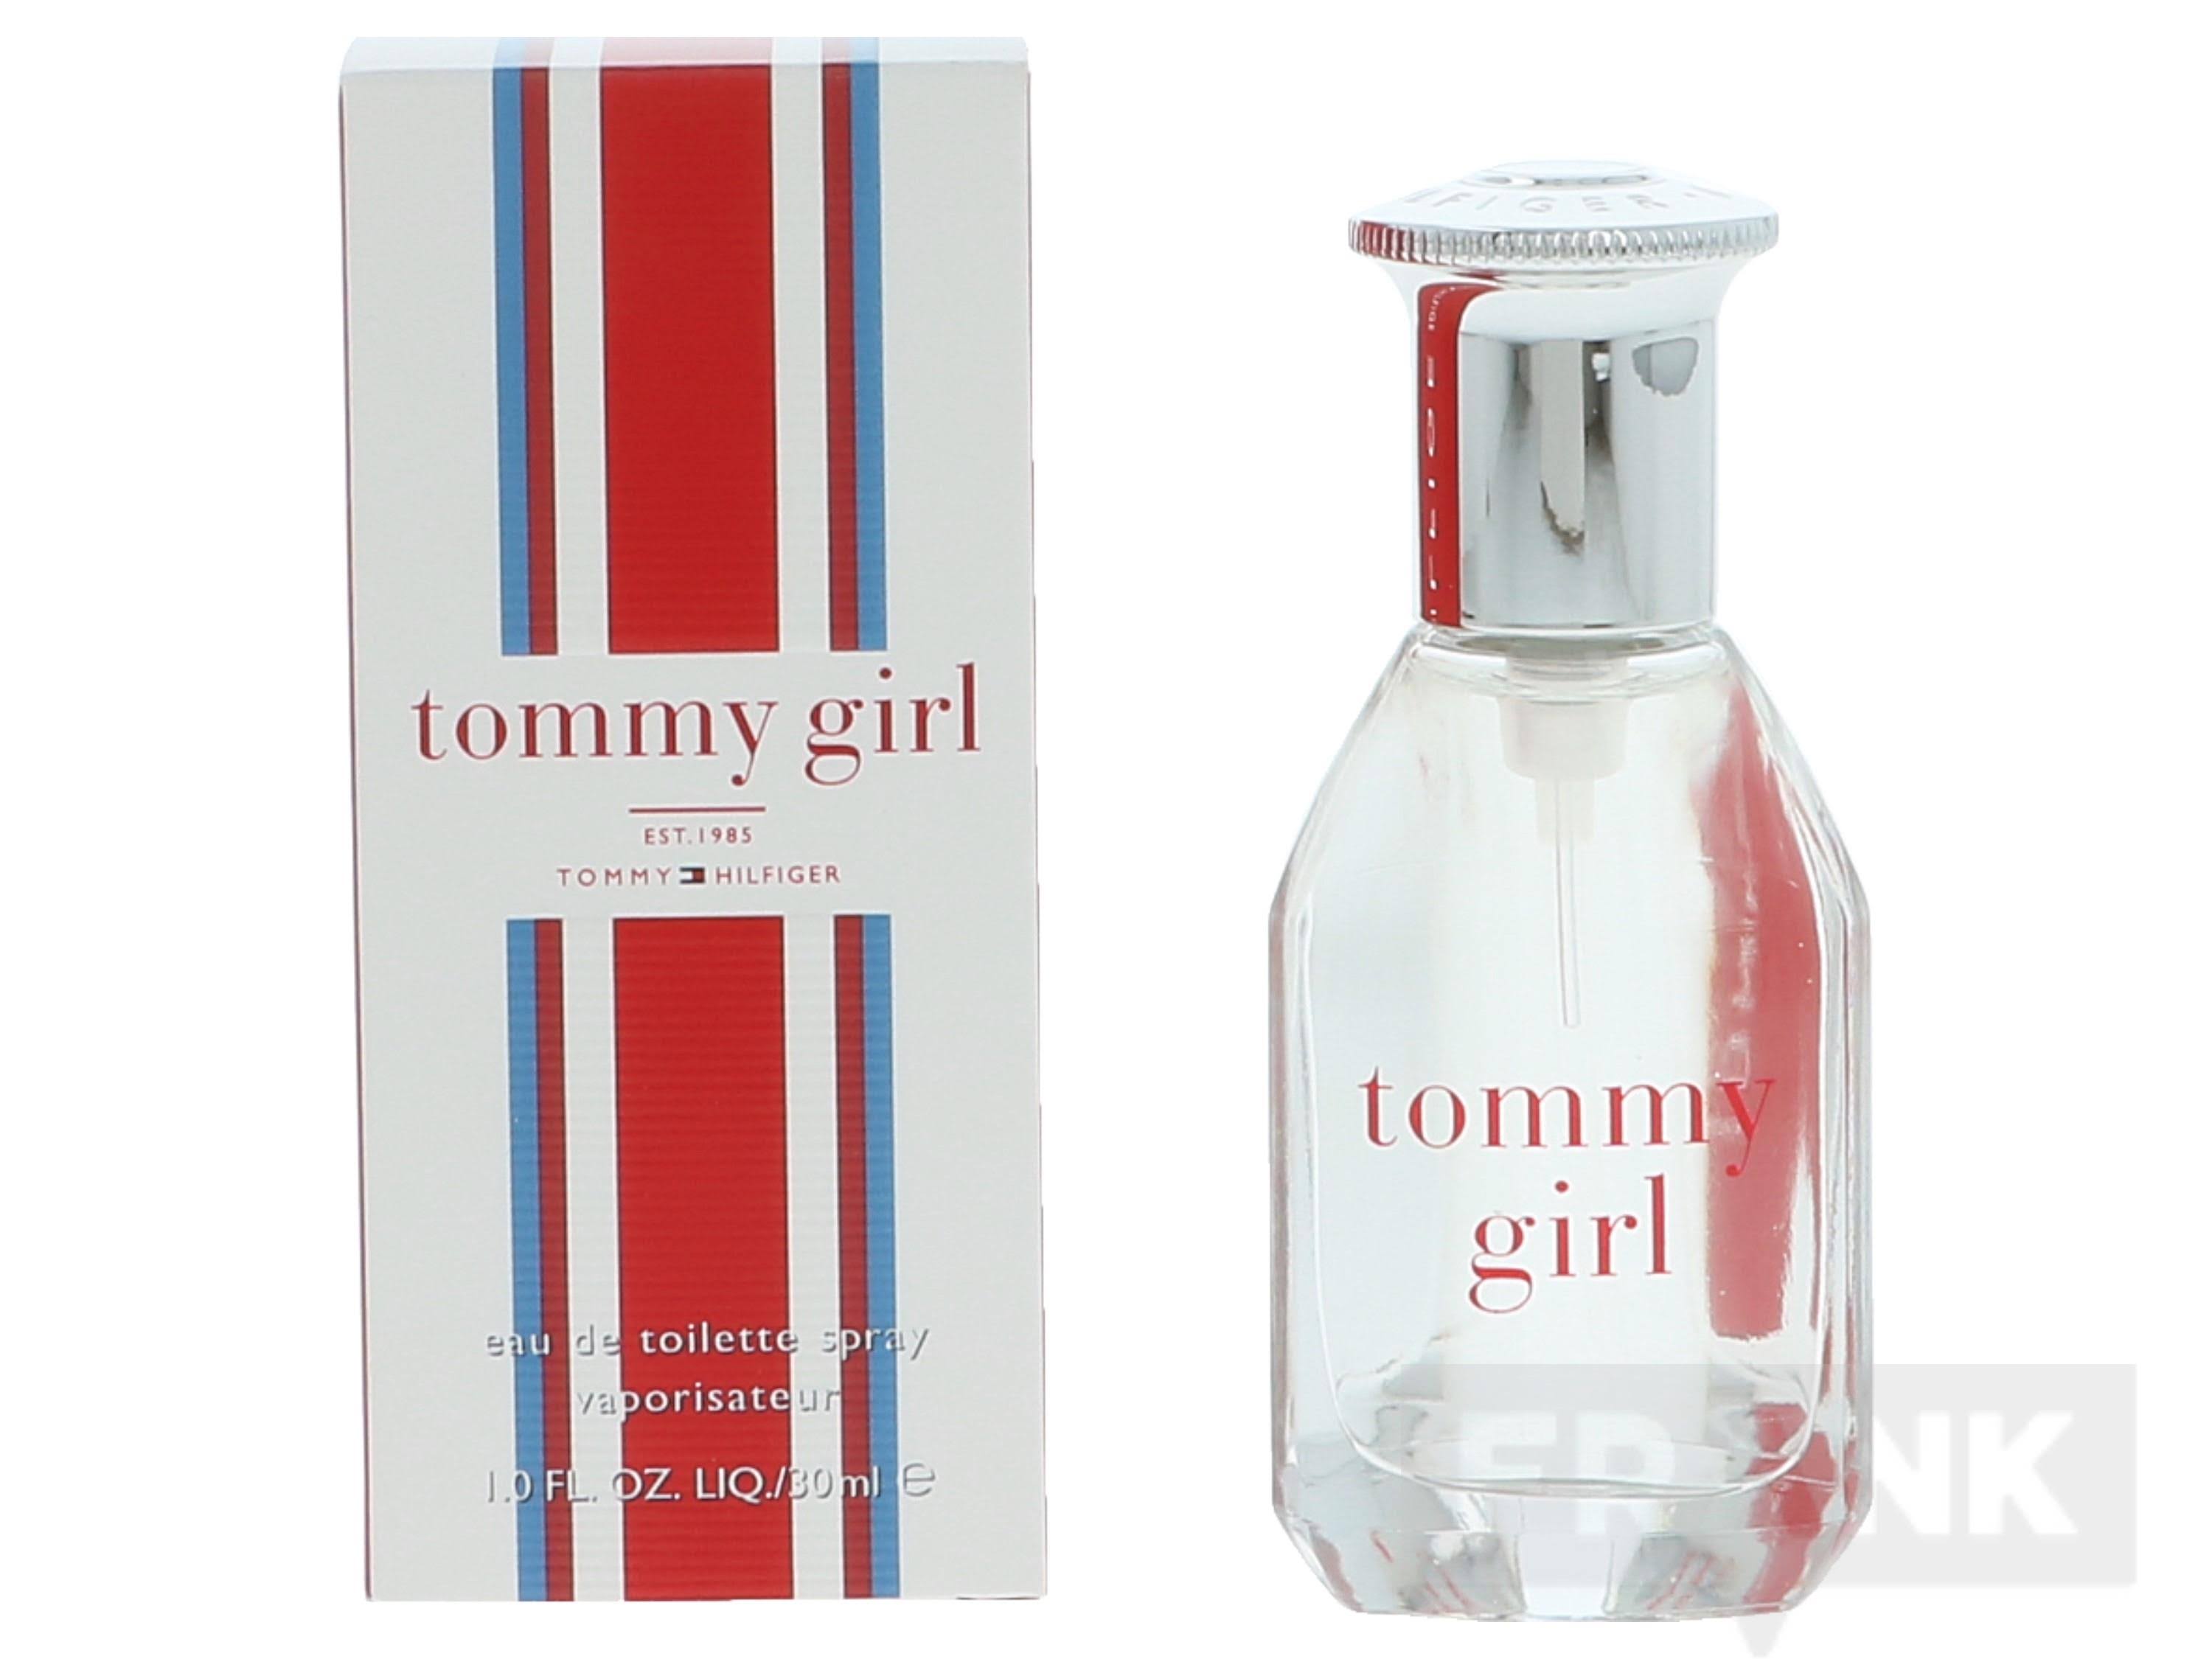 Tommy Girl Eau De Cologne Spray - 30ml